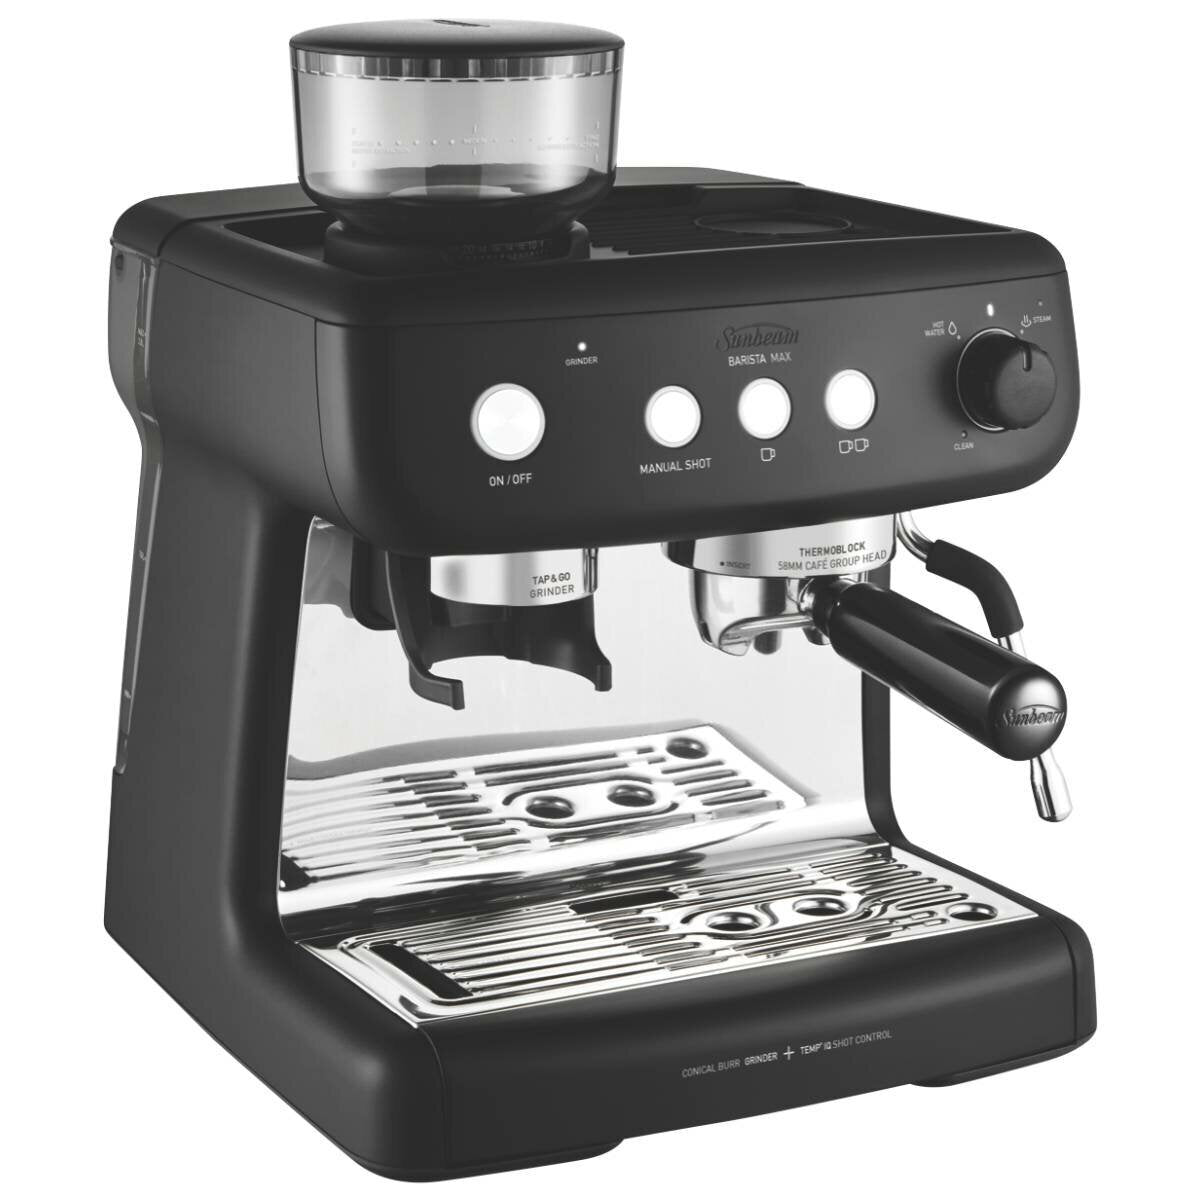 Sunbeam Barista Max Espresso Coffee Machine Black EM5300K